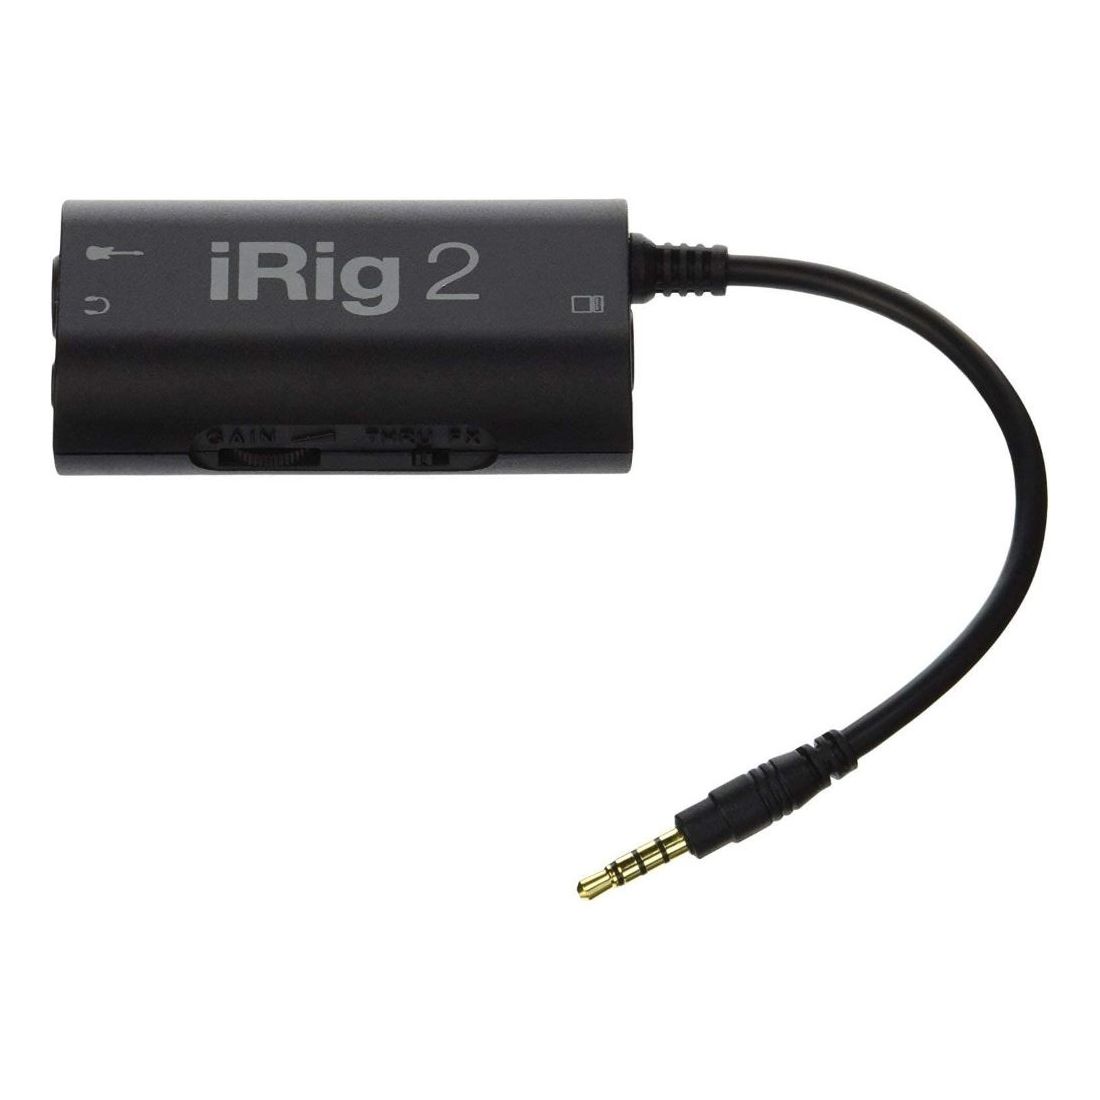 IK Multimedia iRig 2 Audio Interface